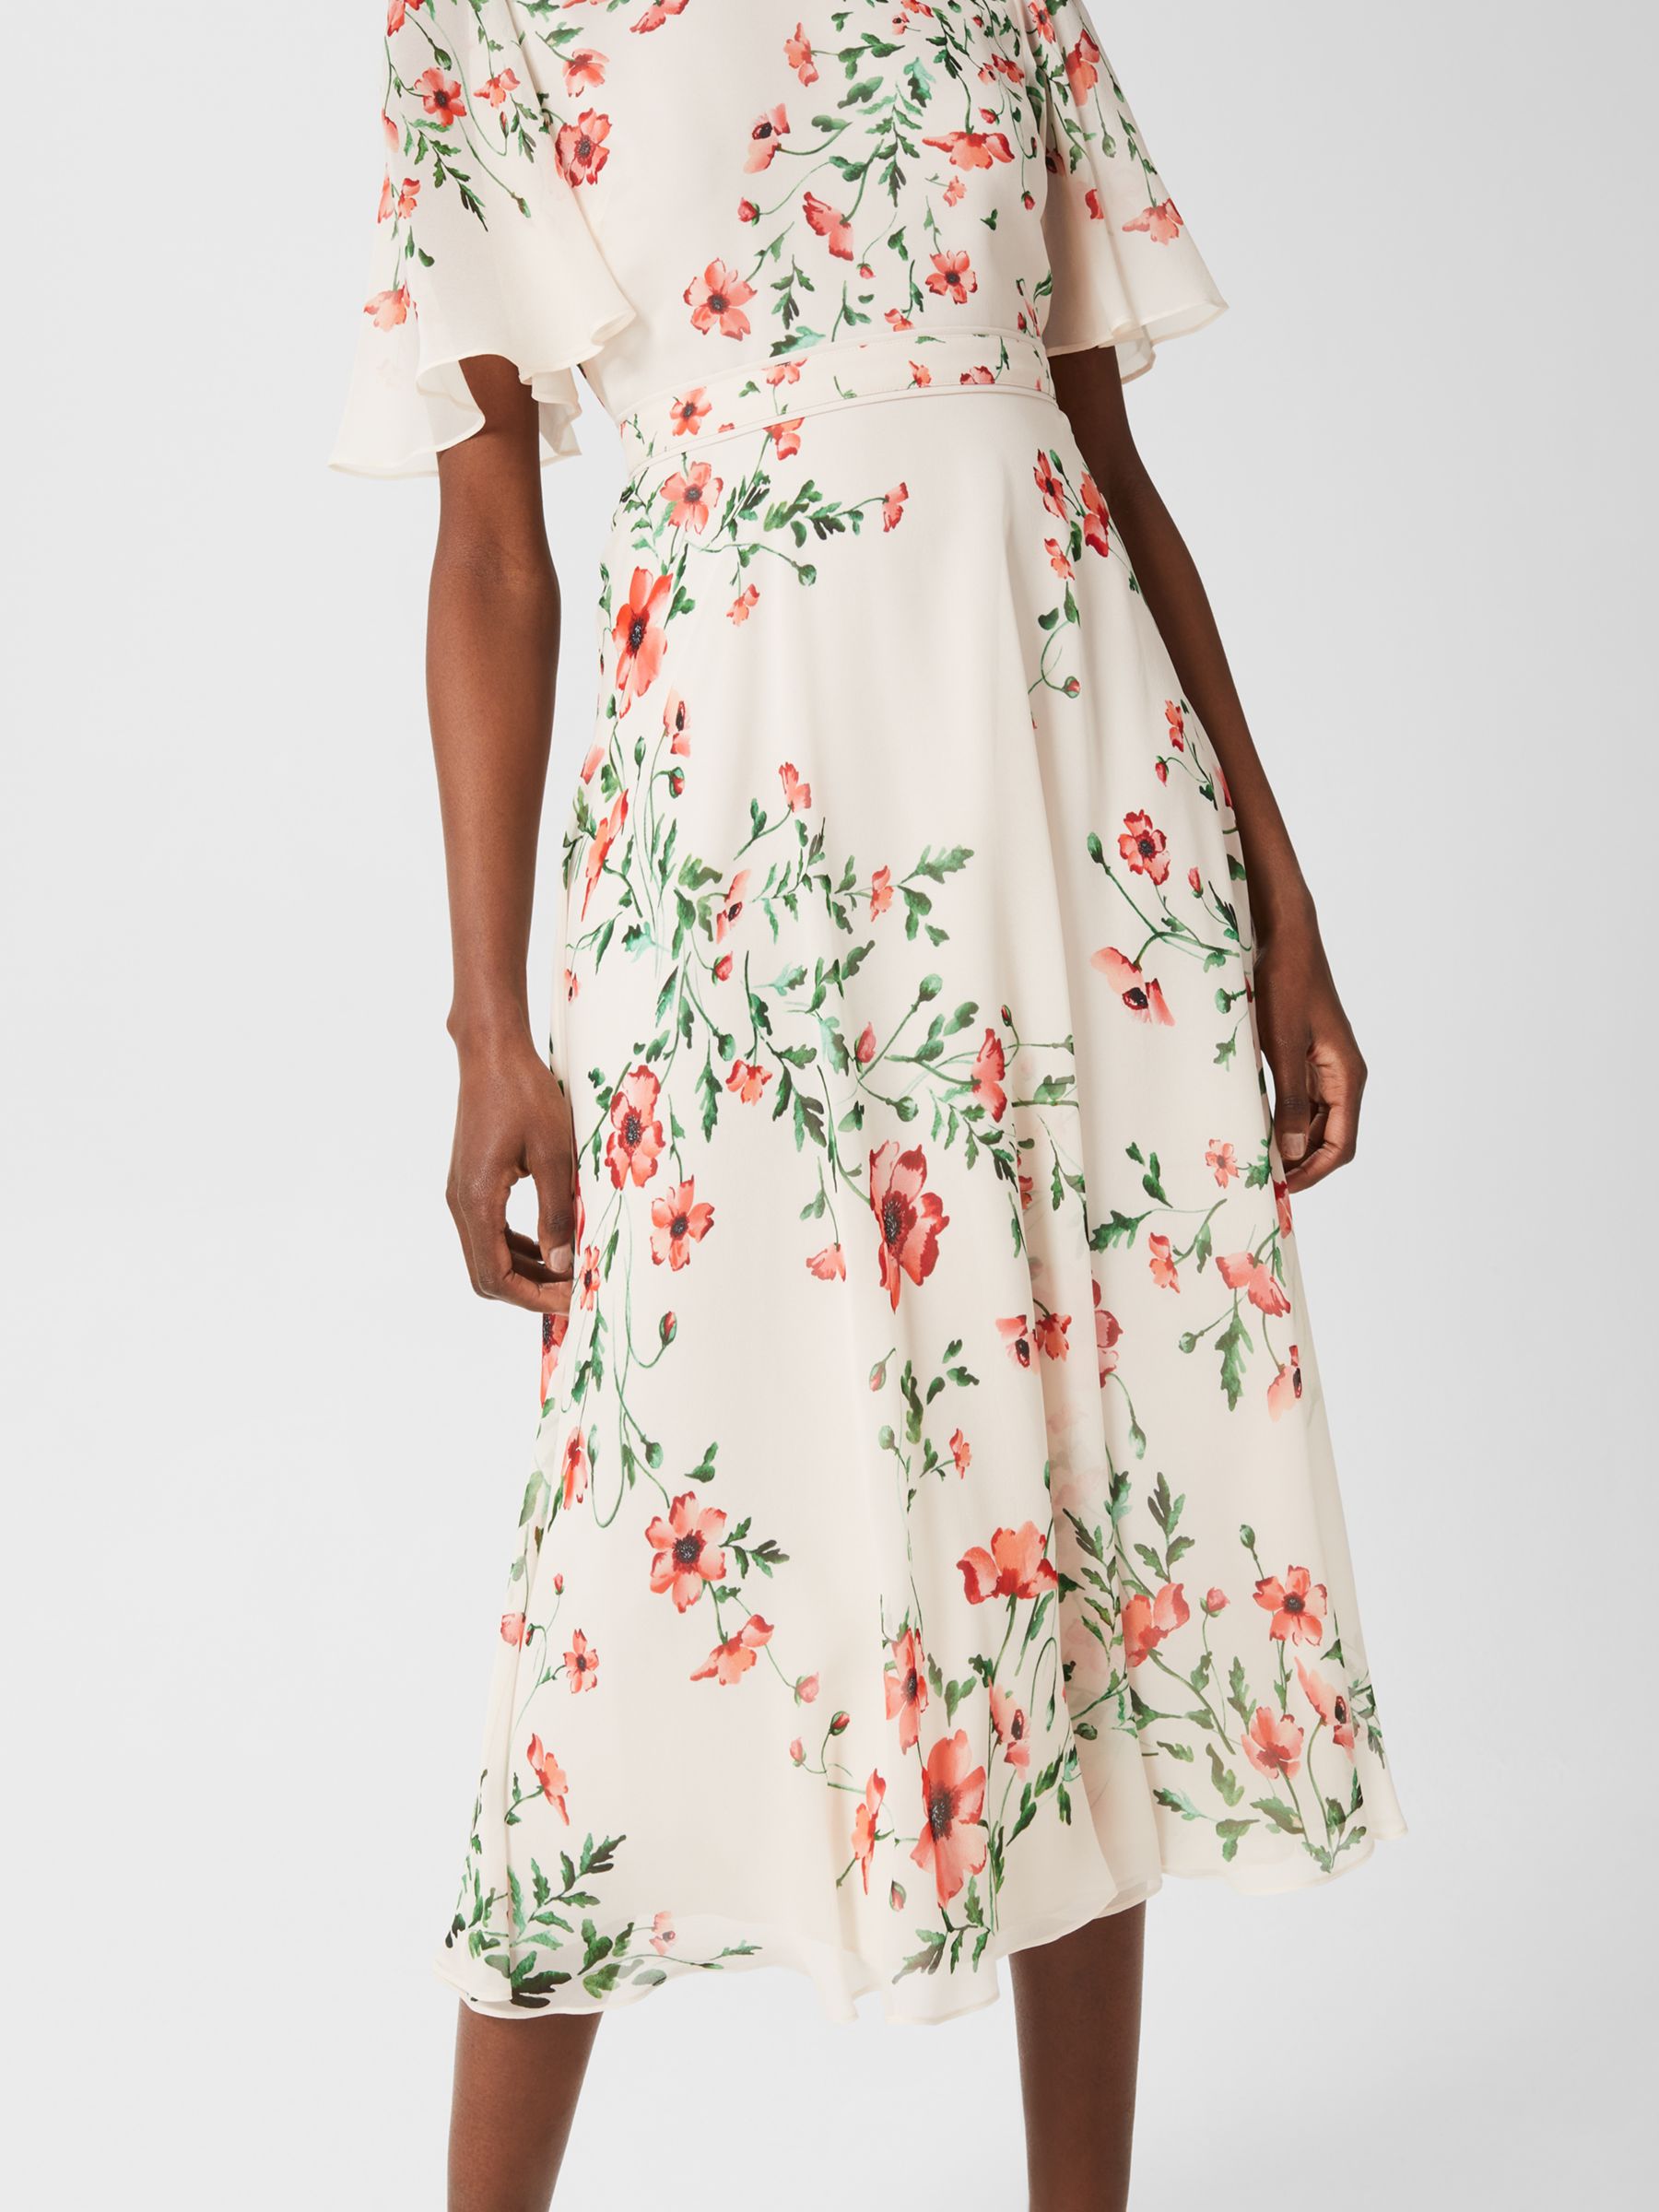 Hobbs Gianna Silk Floral Midi Dress, Cream/Red, 8